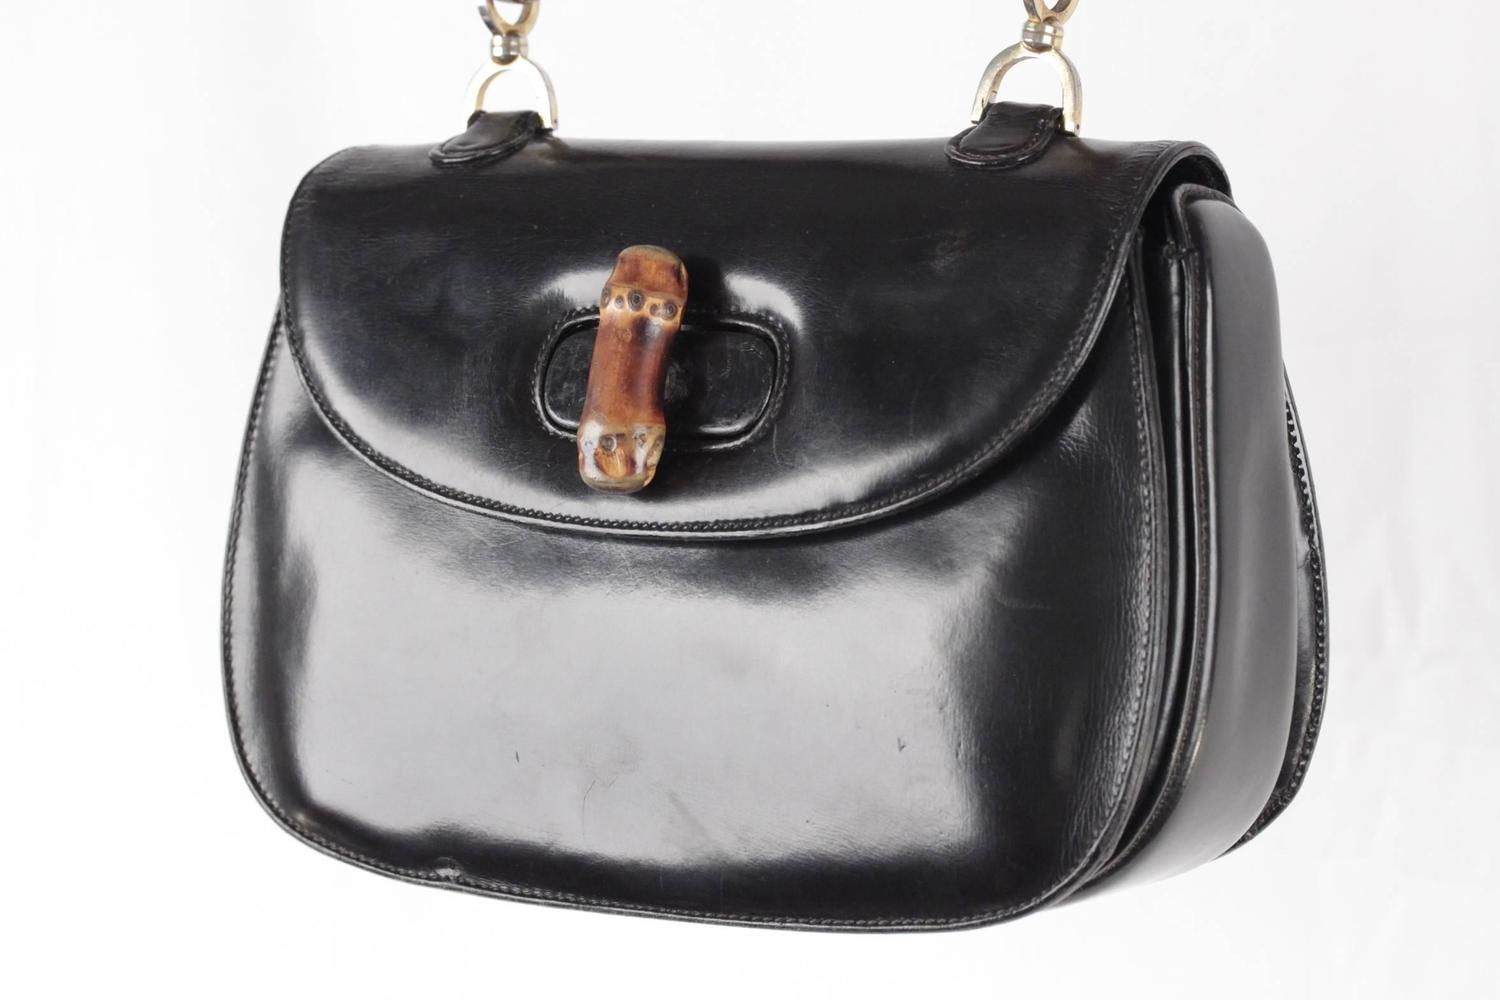 GUCCI Italian VINTAGE Black Leather BAMBOO BAG Handbag PURSE Rare at 1stdibs